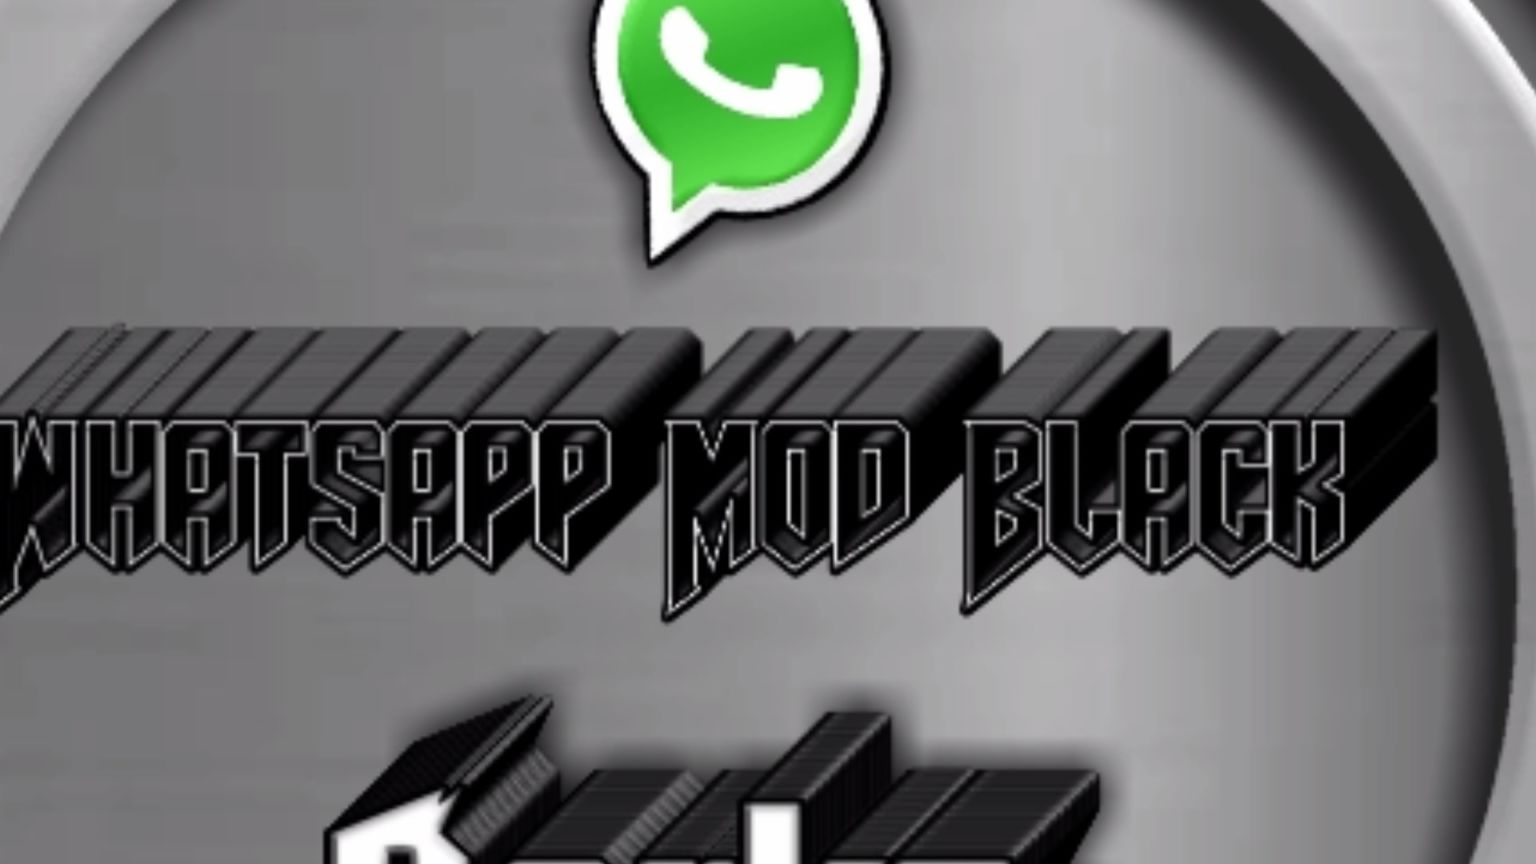 WhatsApp Darkz Mod with Extra feature no ad download করে নিন একদম ফ্রিতে